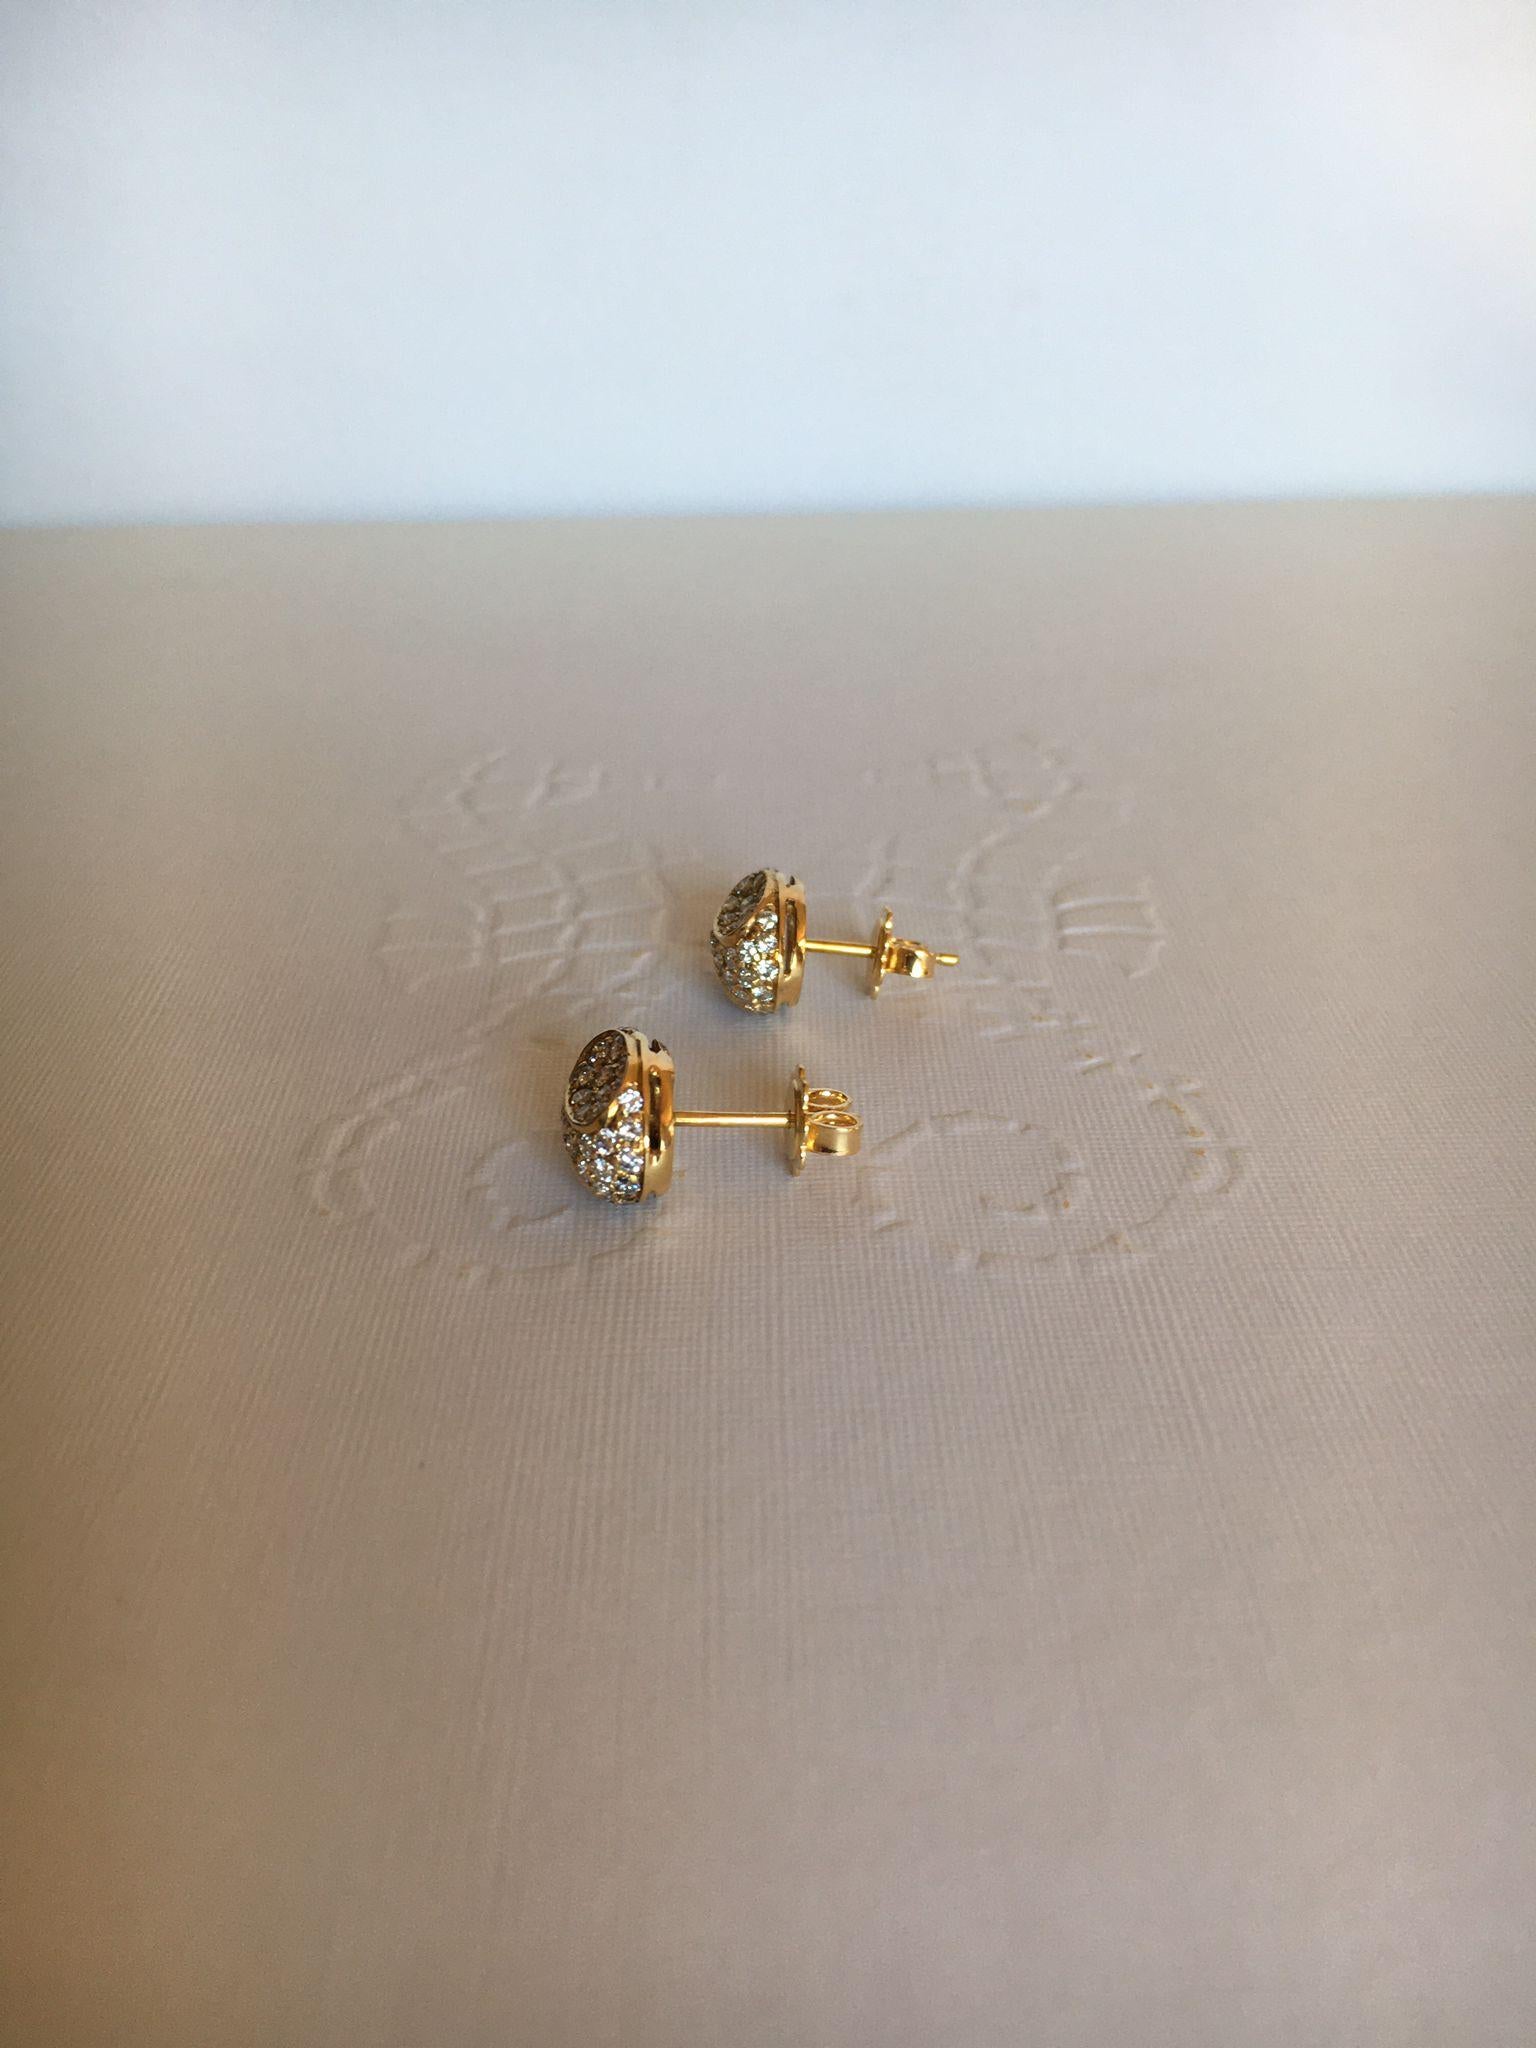 18kt yellow gold 4.98ct earrings, diamonds 1.72ct, handmade stud earrings In New Condition For Sale In Firenze, FI